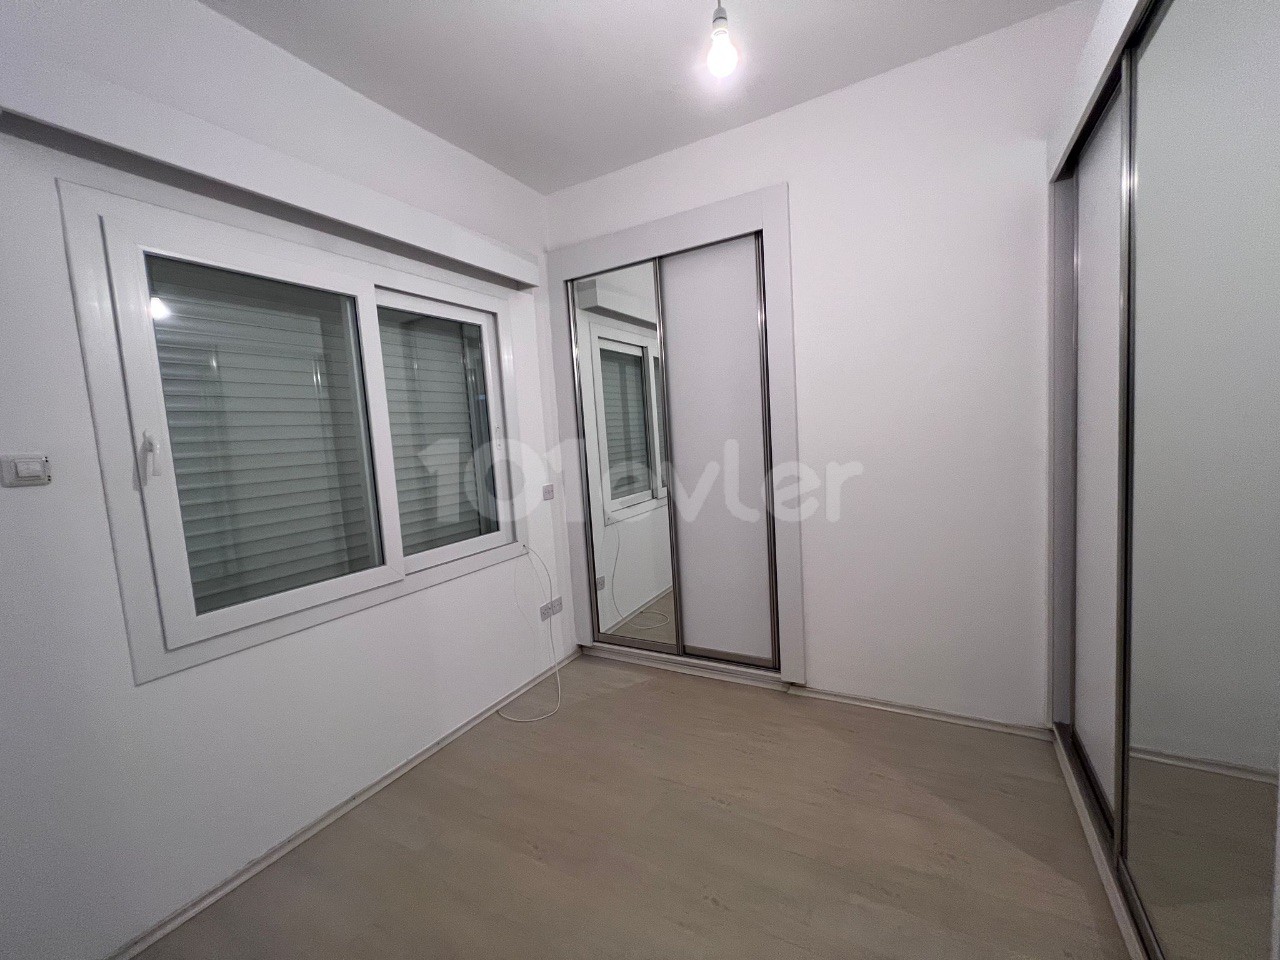 Ground Floor Apartment with Vrf System in Marmara Region